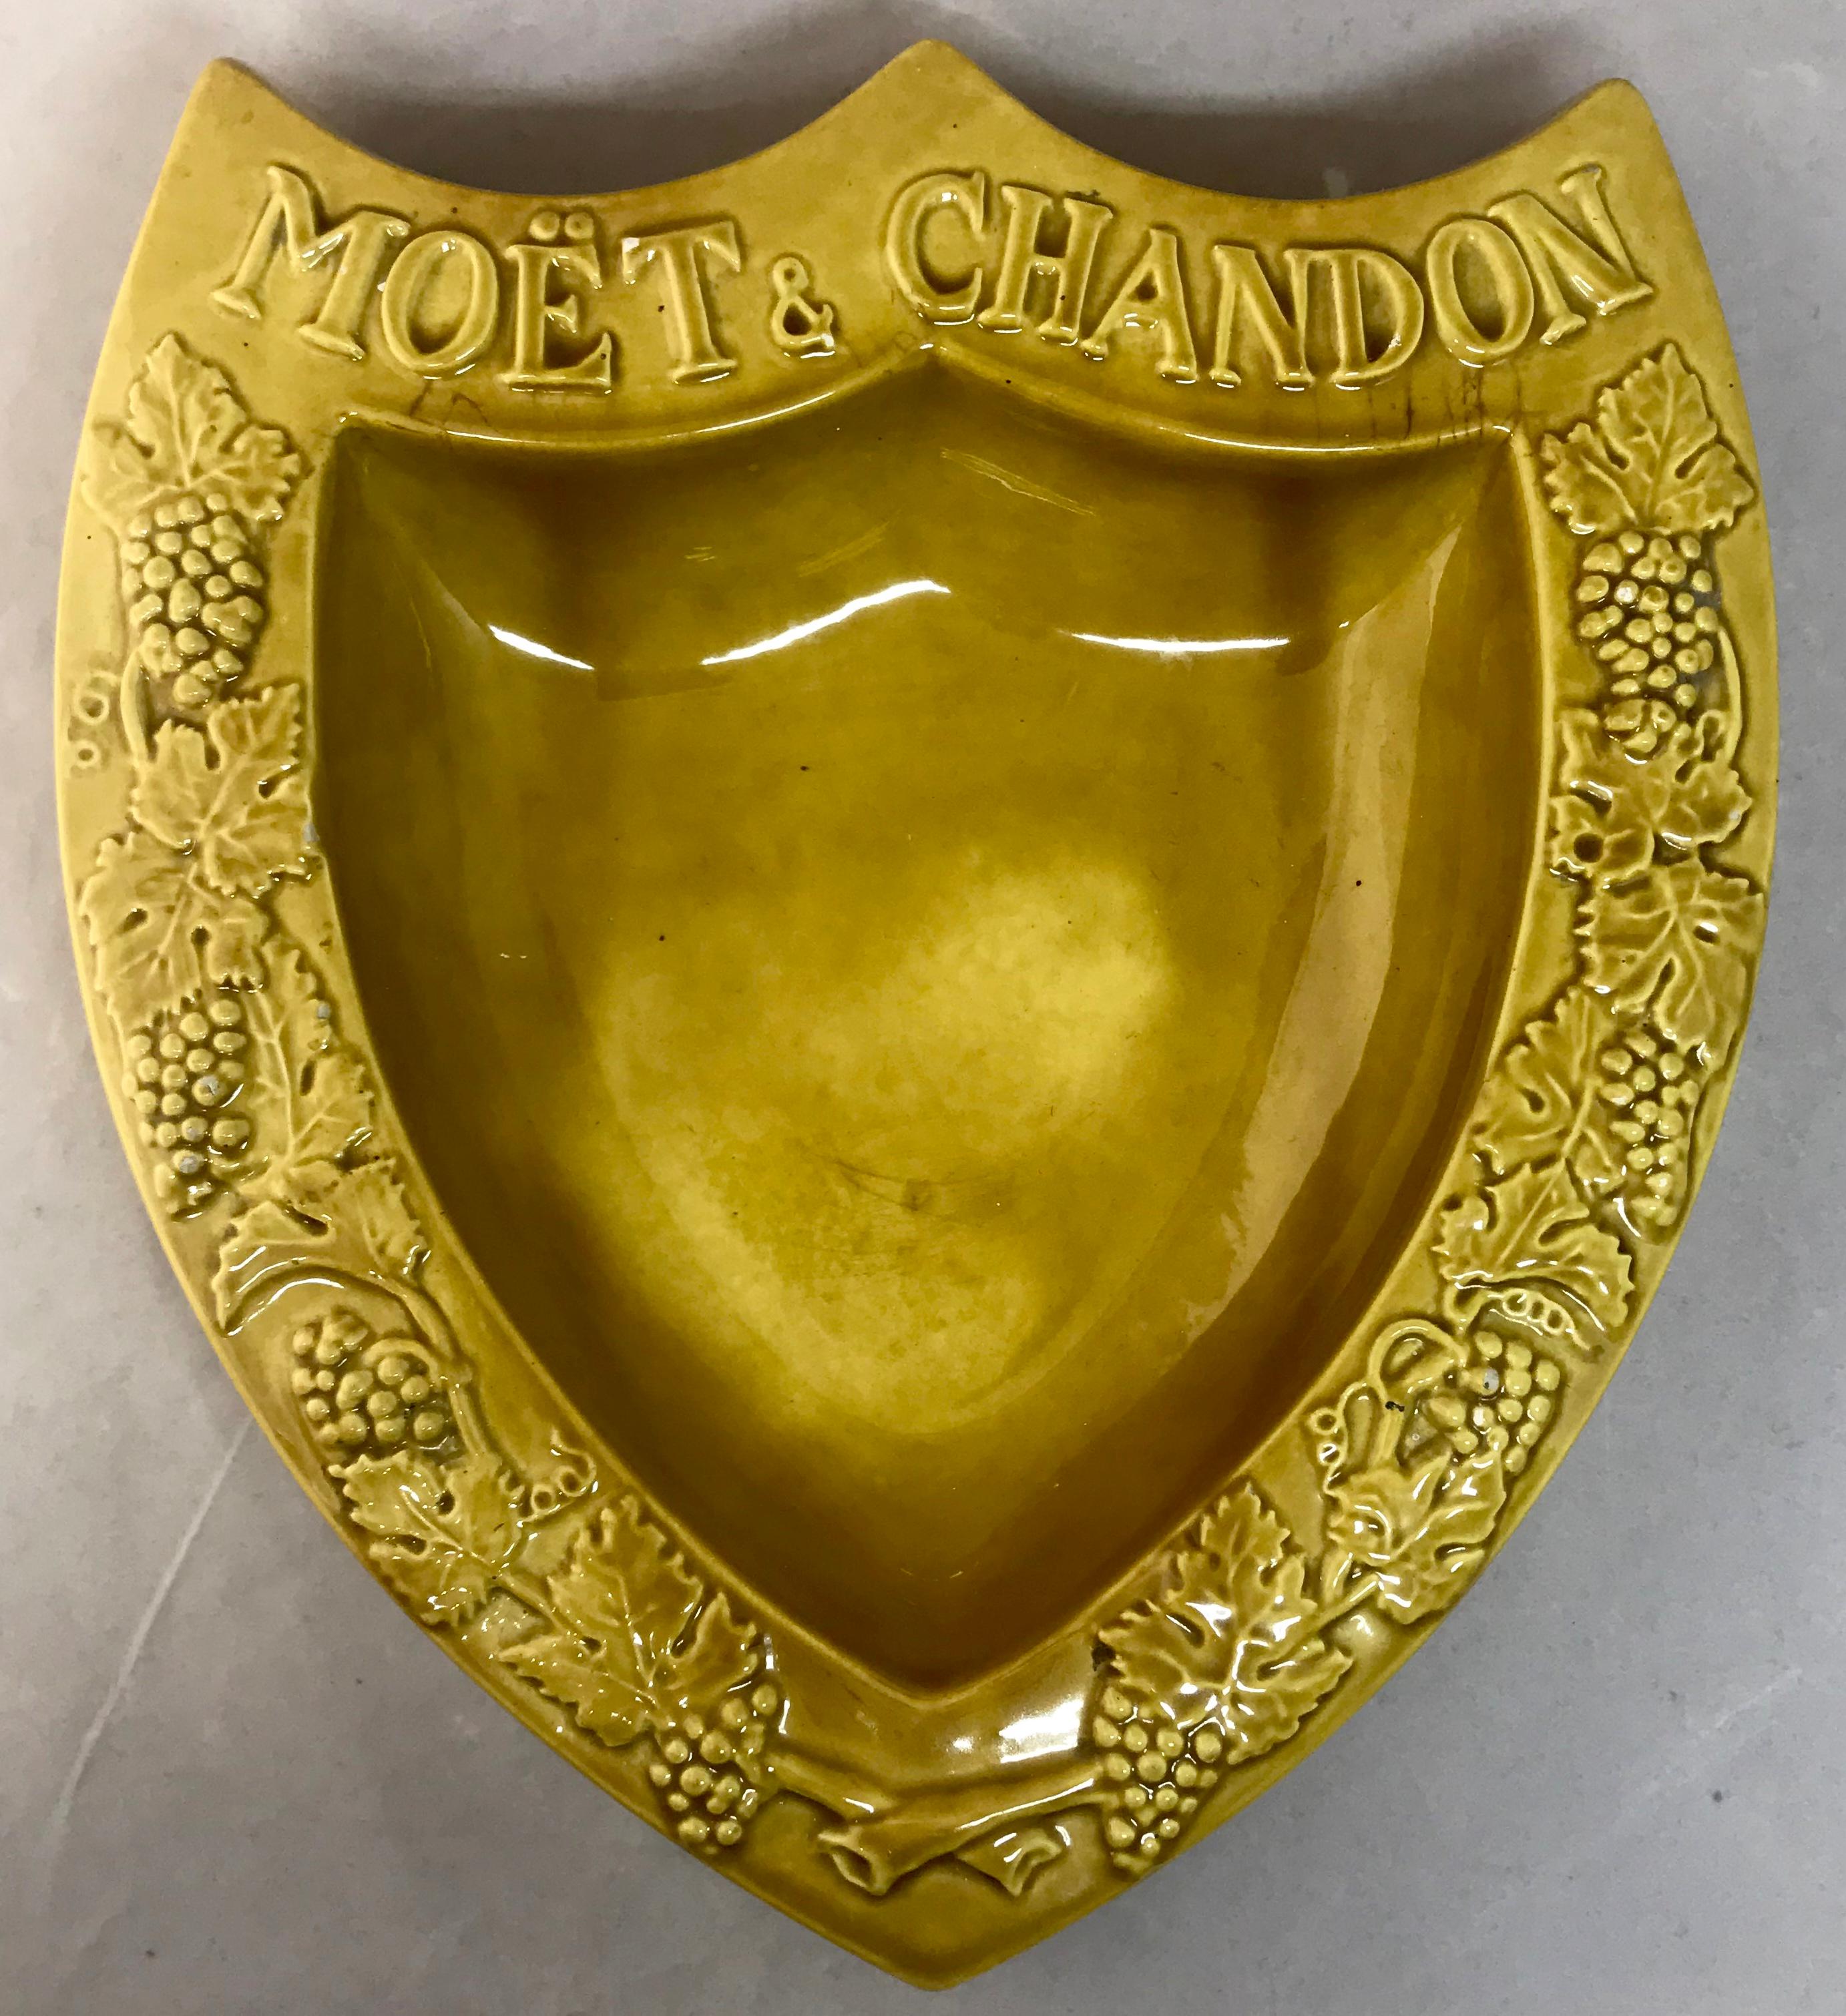 Moët & Chandon vide poche. Large glazed terracotta shield-shaped chartreuse color svuota tasca, France, mid-20th century.
Dimensions: 8.5